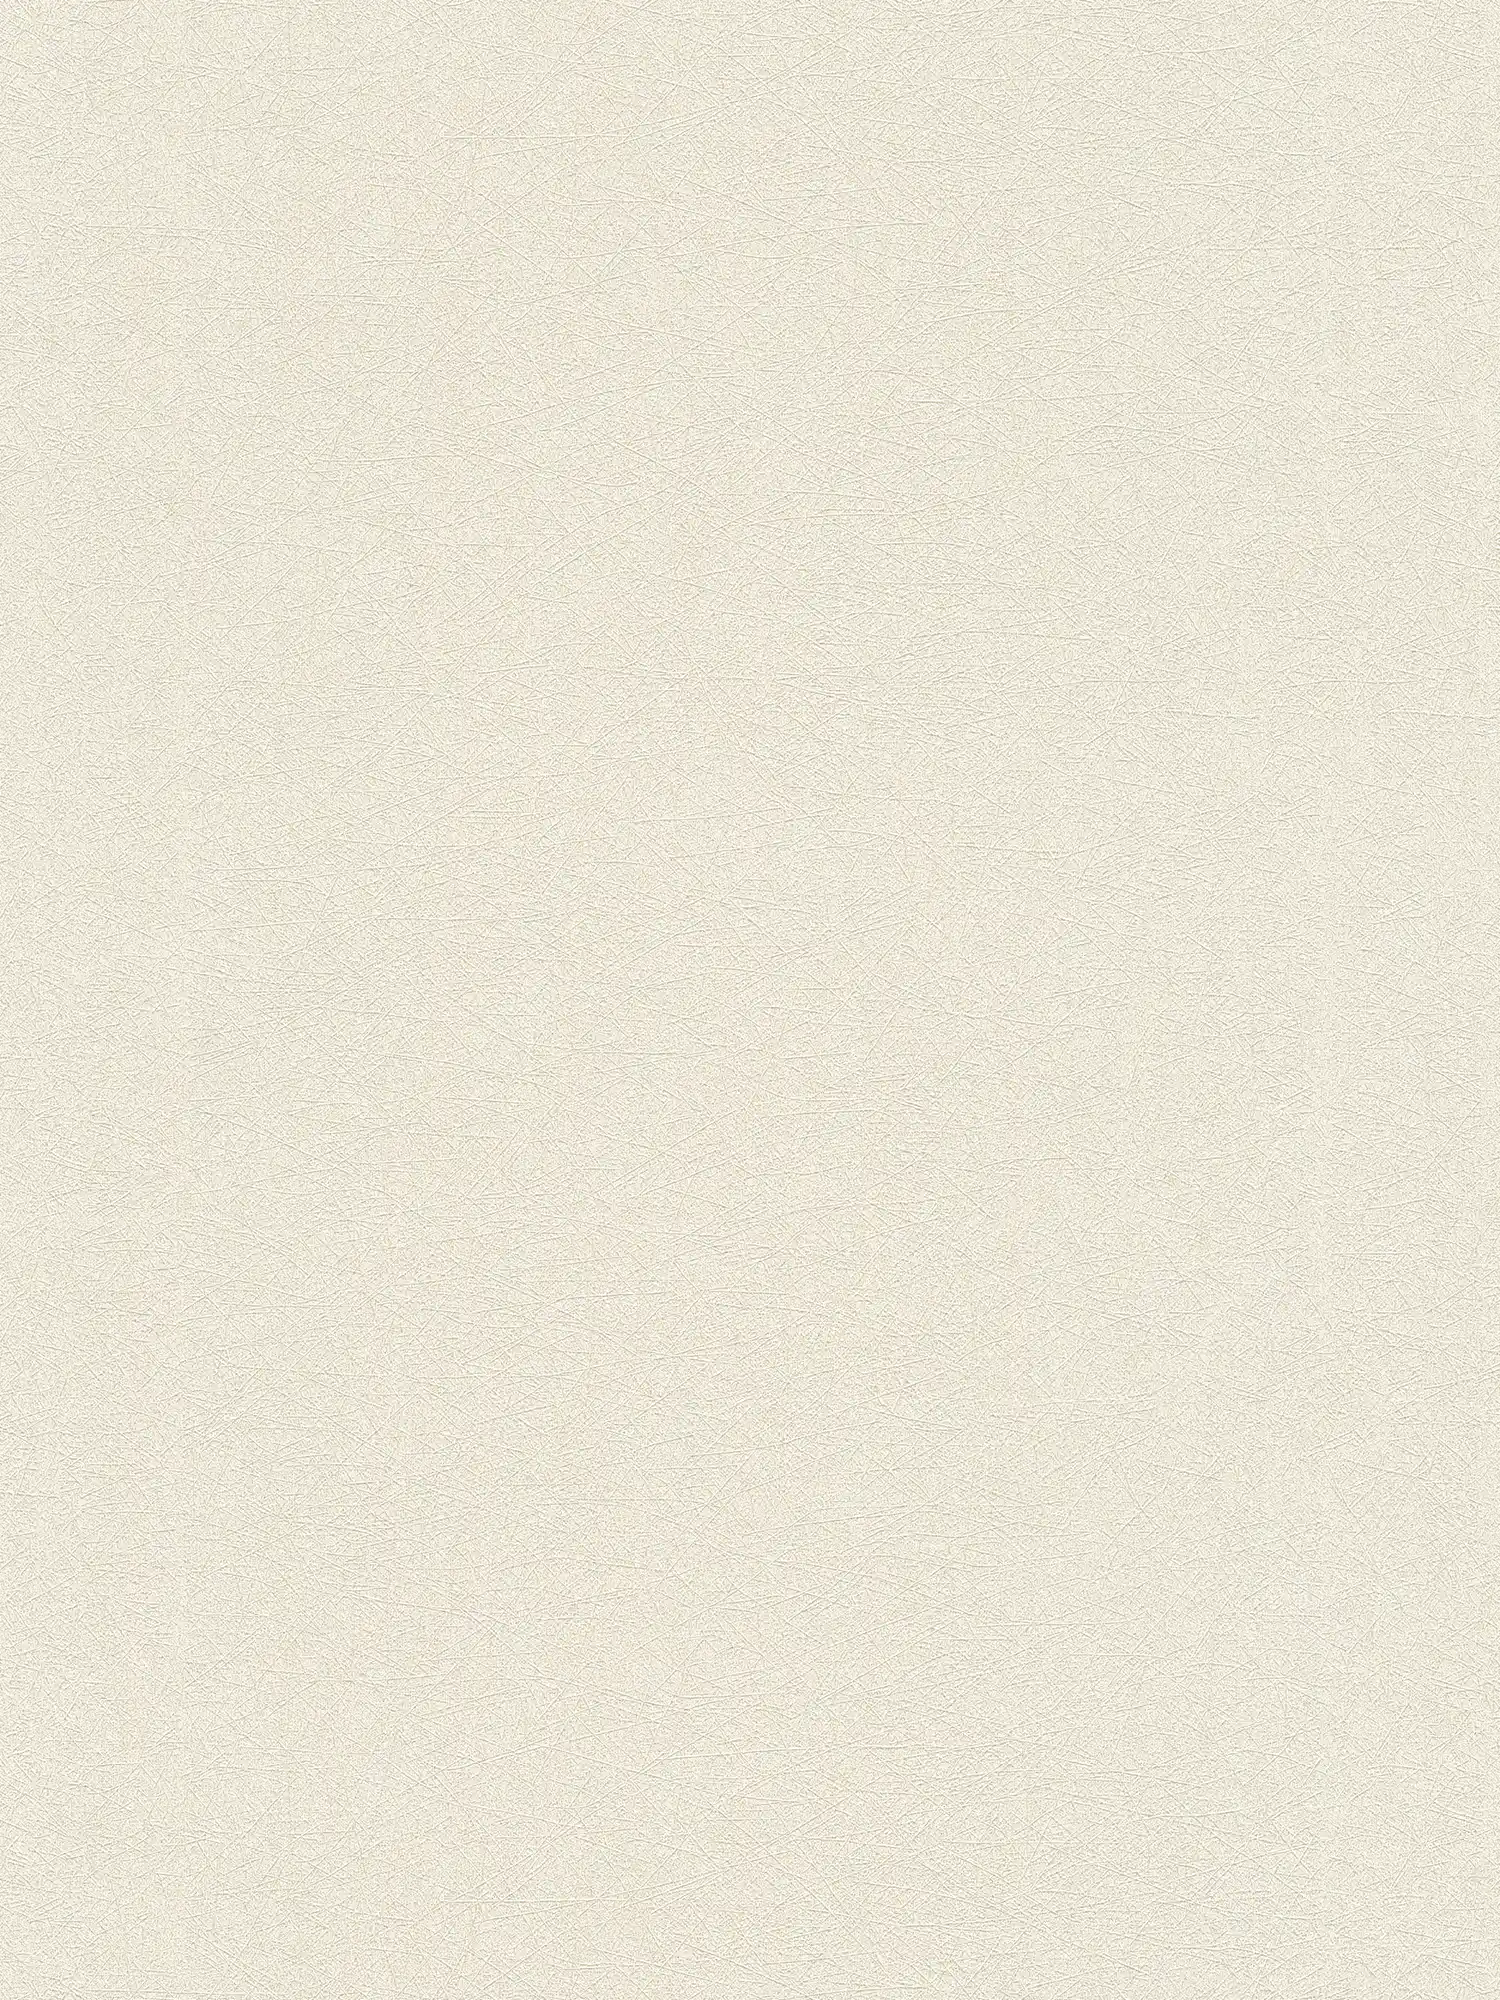 Non-woven wallpaper plain with fiber texture pattern - beige
